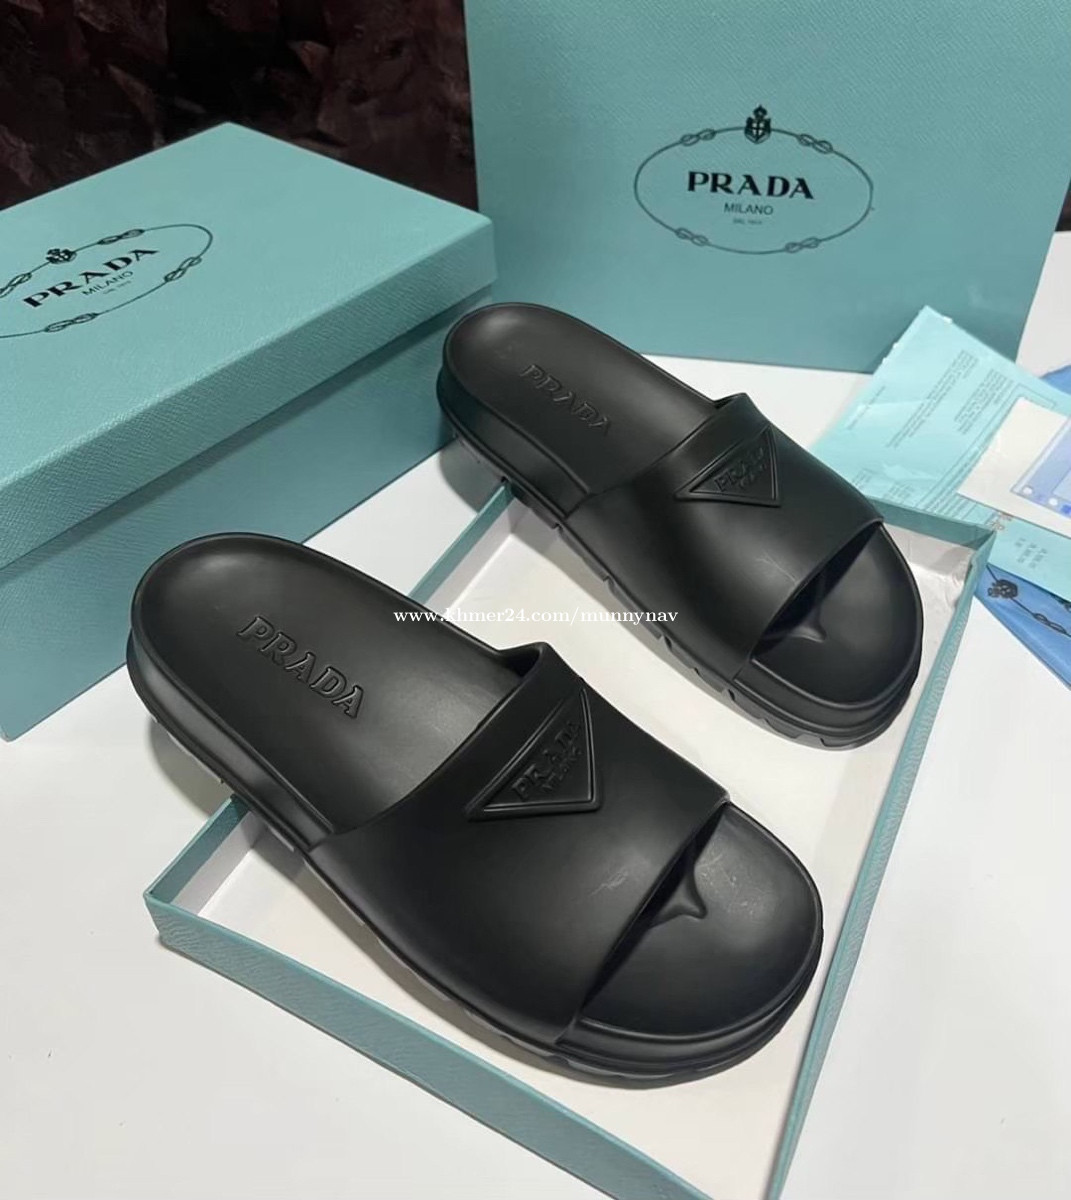 Prada Brown Ombré Patent Leather Sandals Size 36 US 6 | eBay